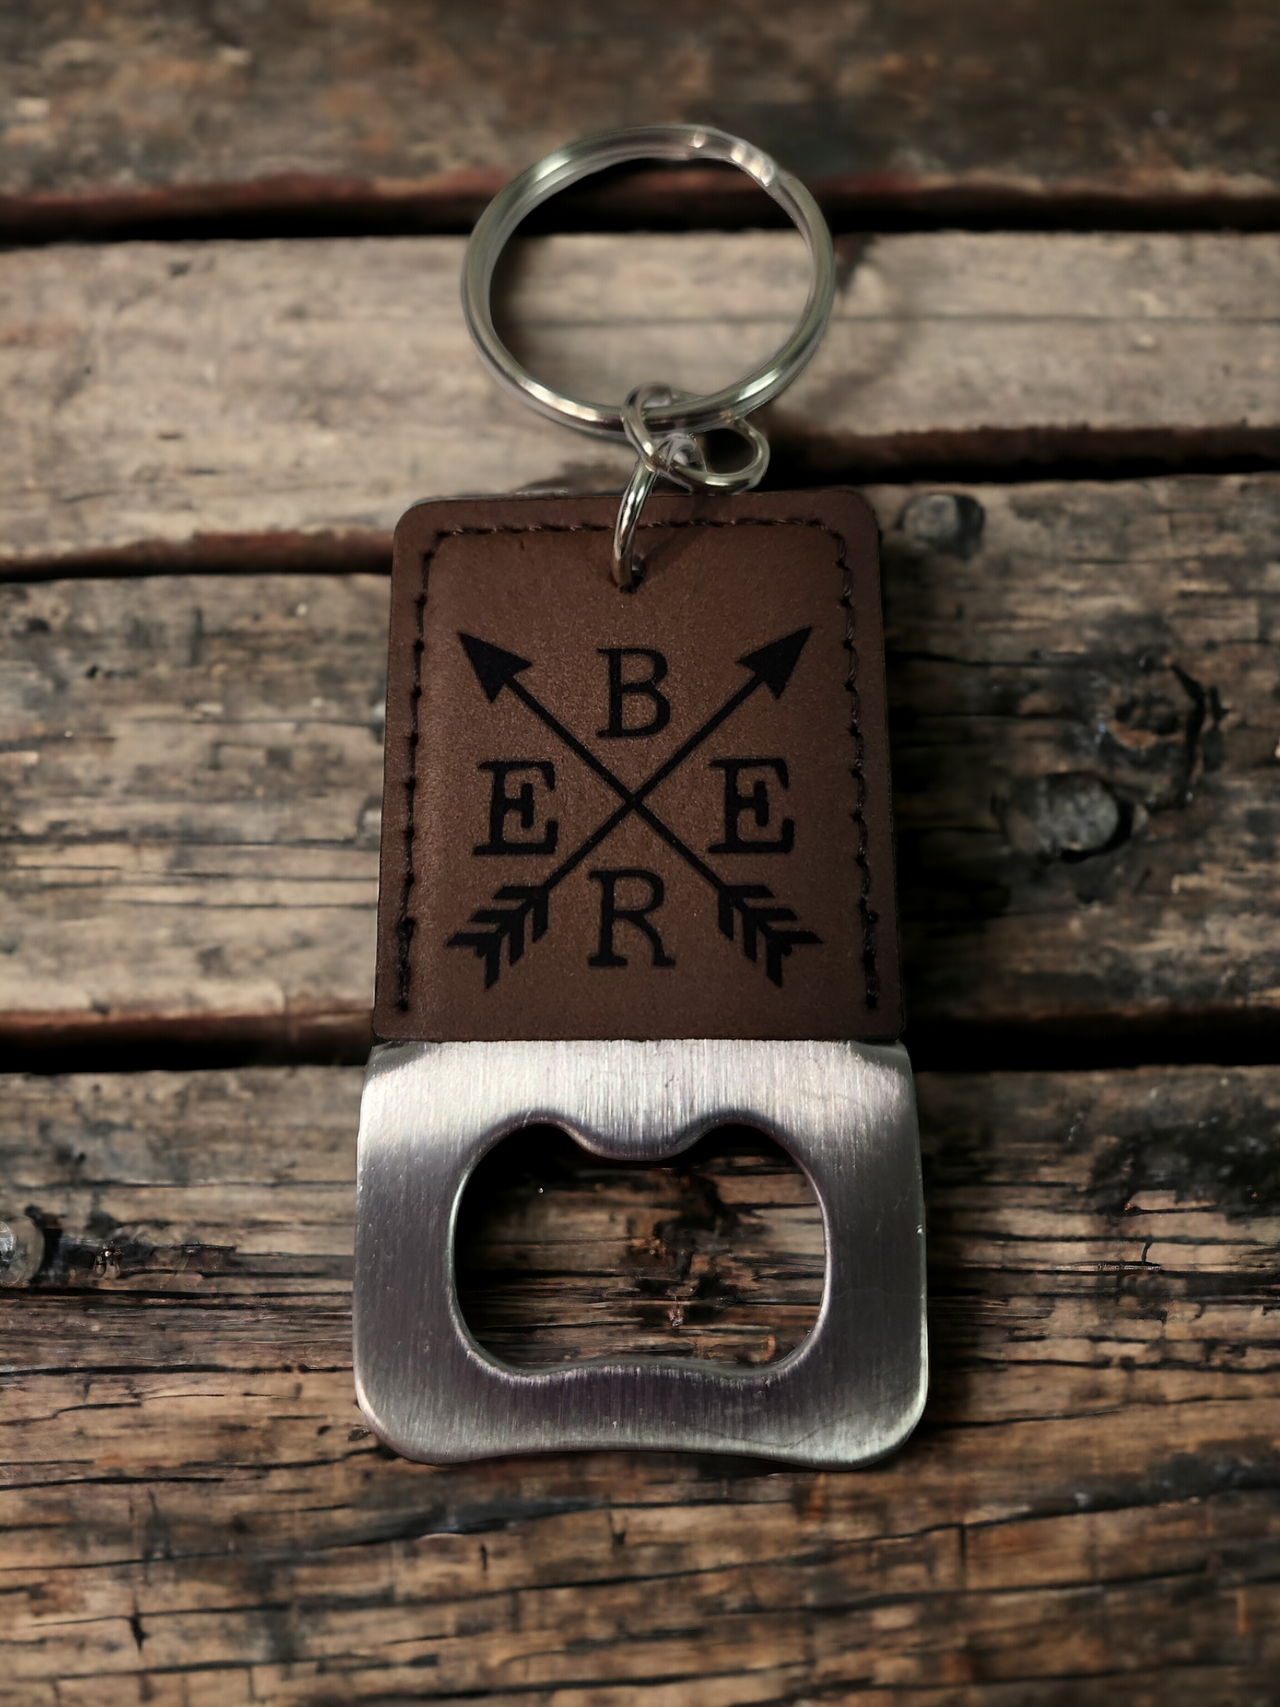 Crossed Arrows Beer Bottle Opener Keychain - Engraved Leatherette Design